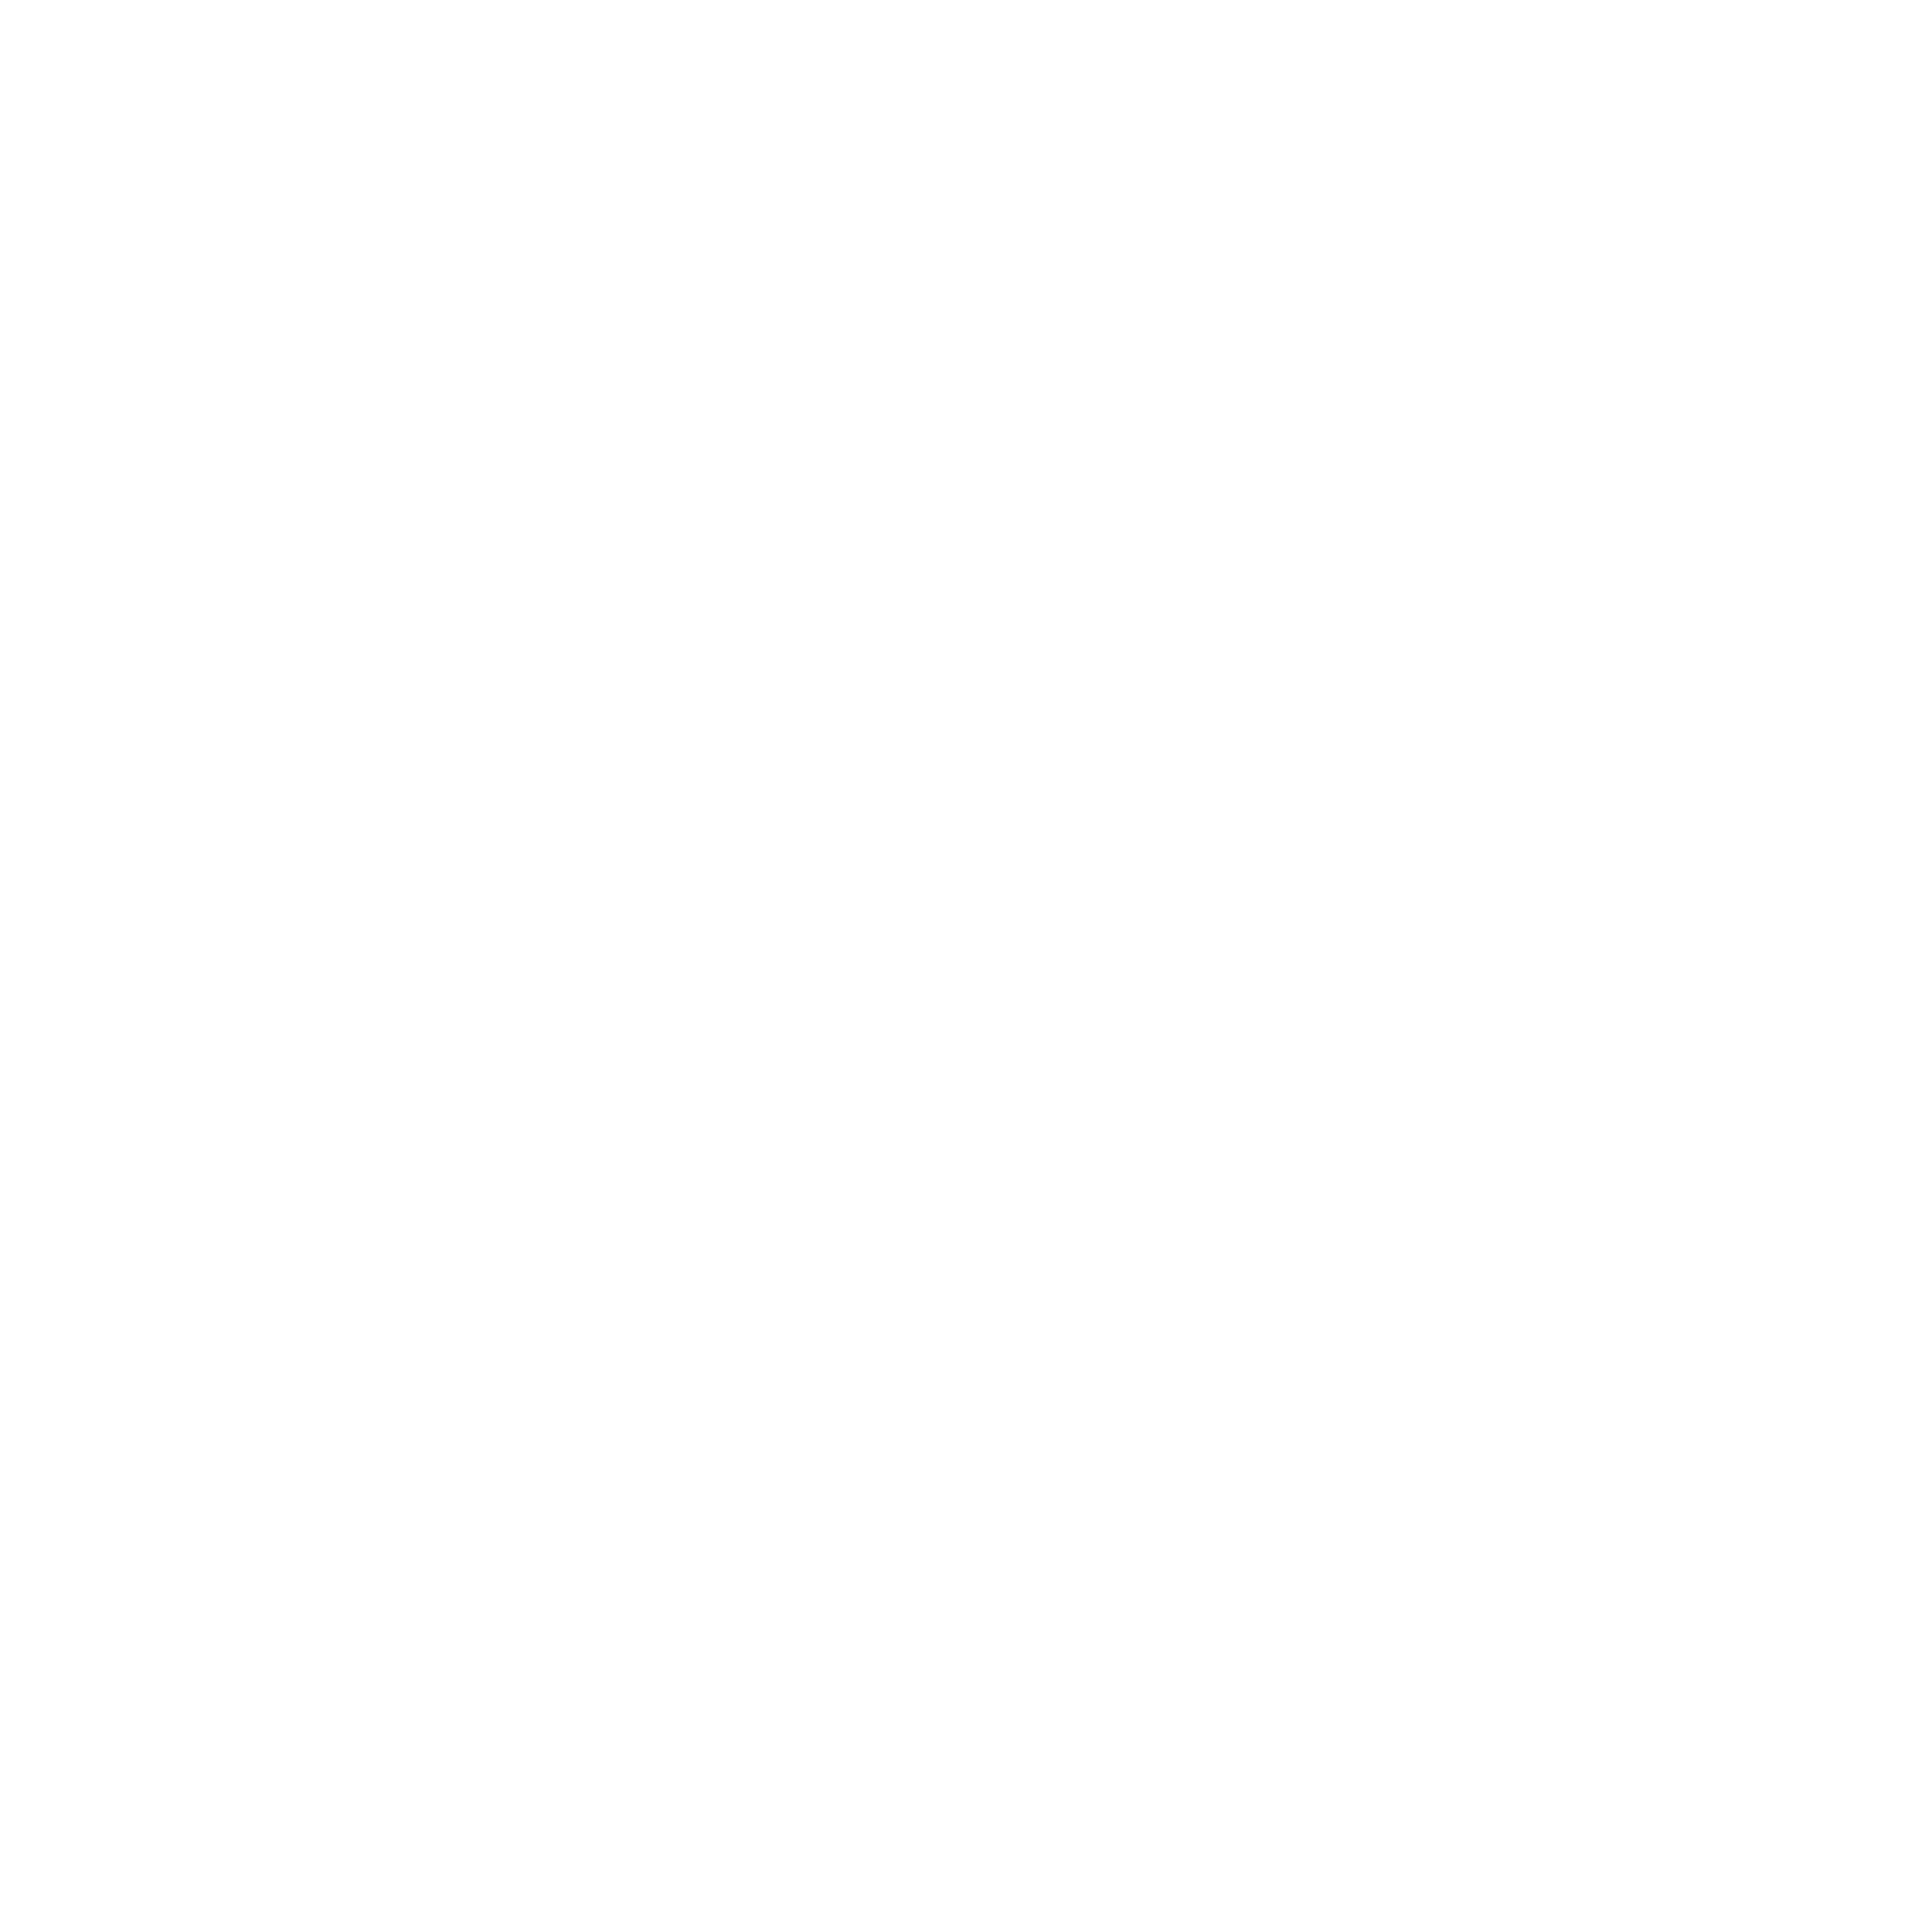 Triangle Backround